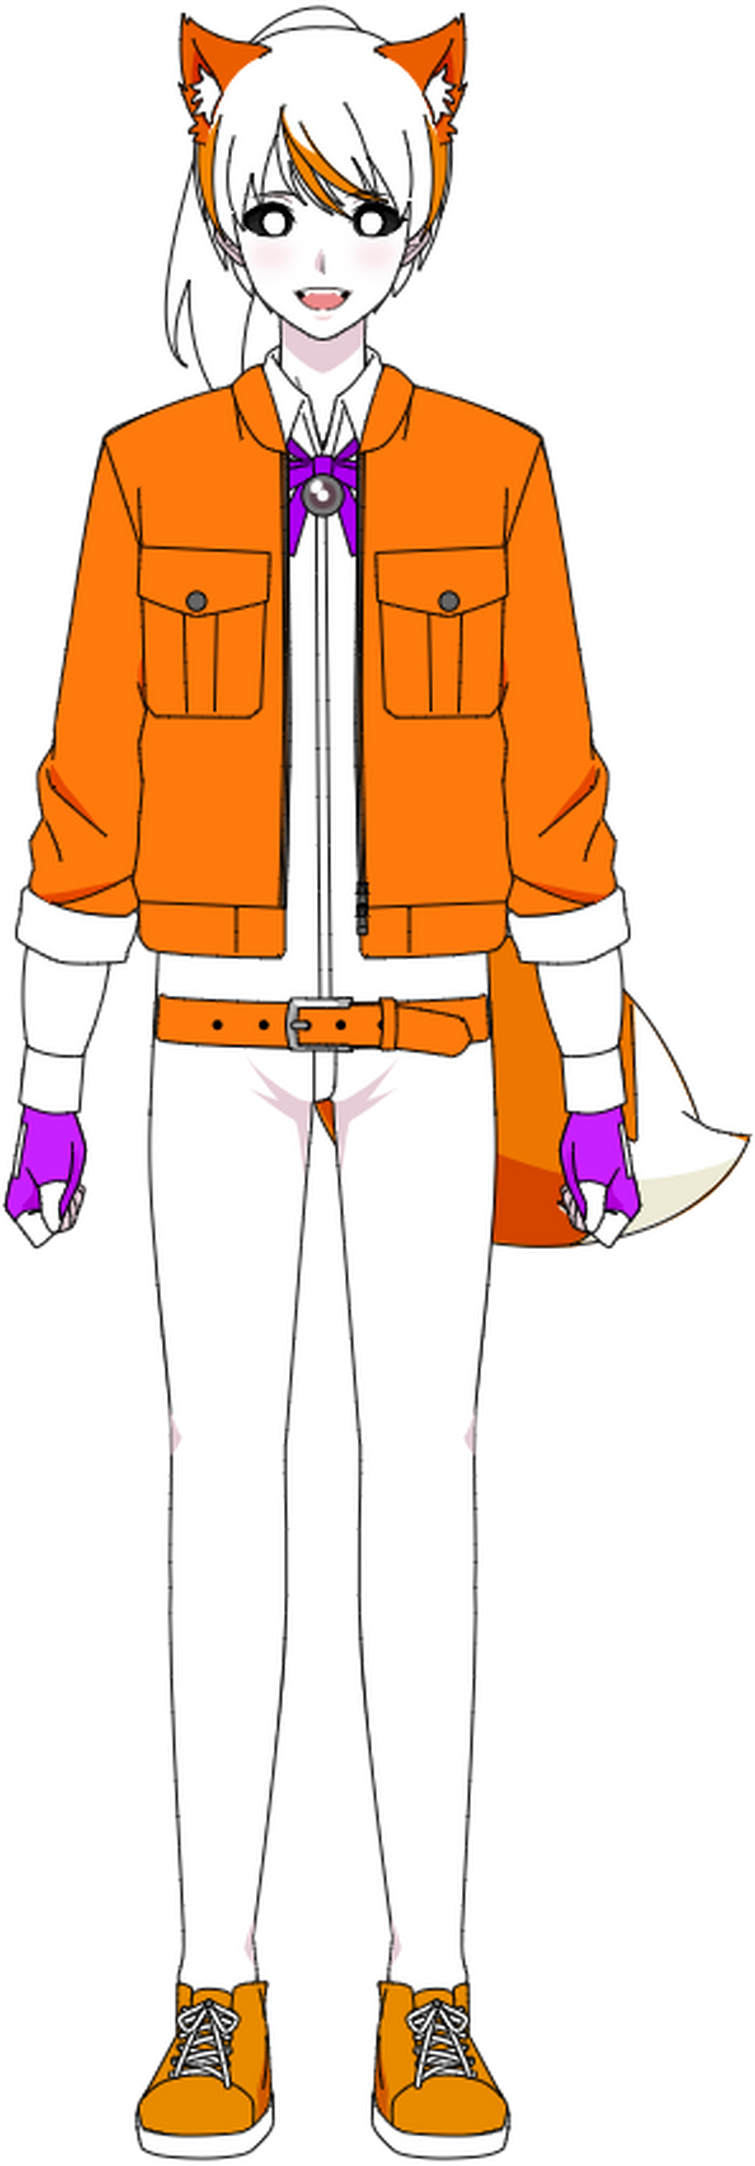 Mangle, F.Foxy & Lolbit male & female w/ anime character creator